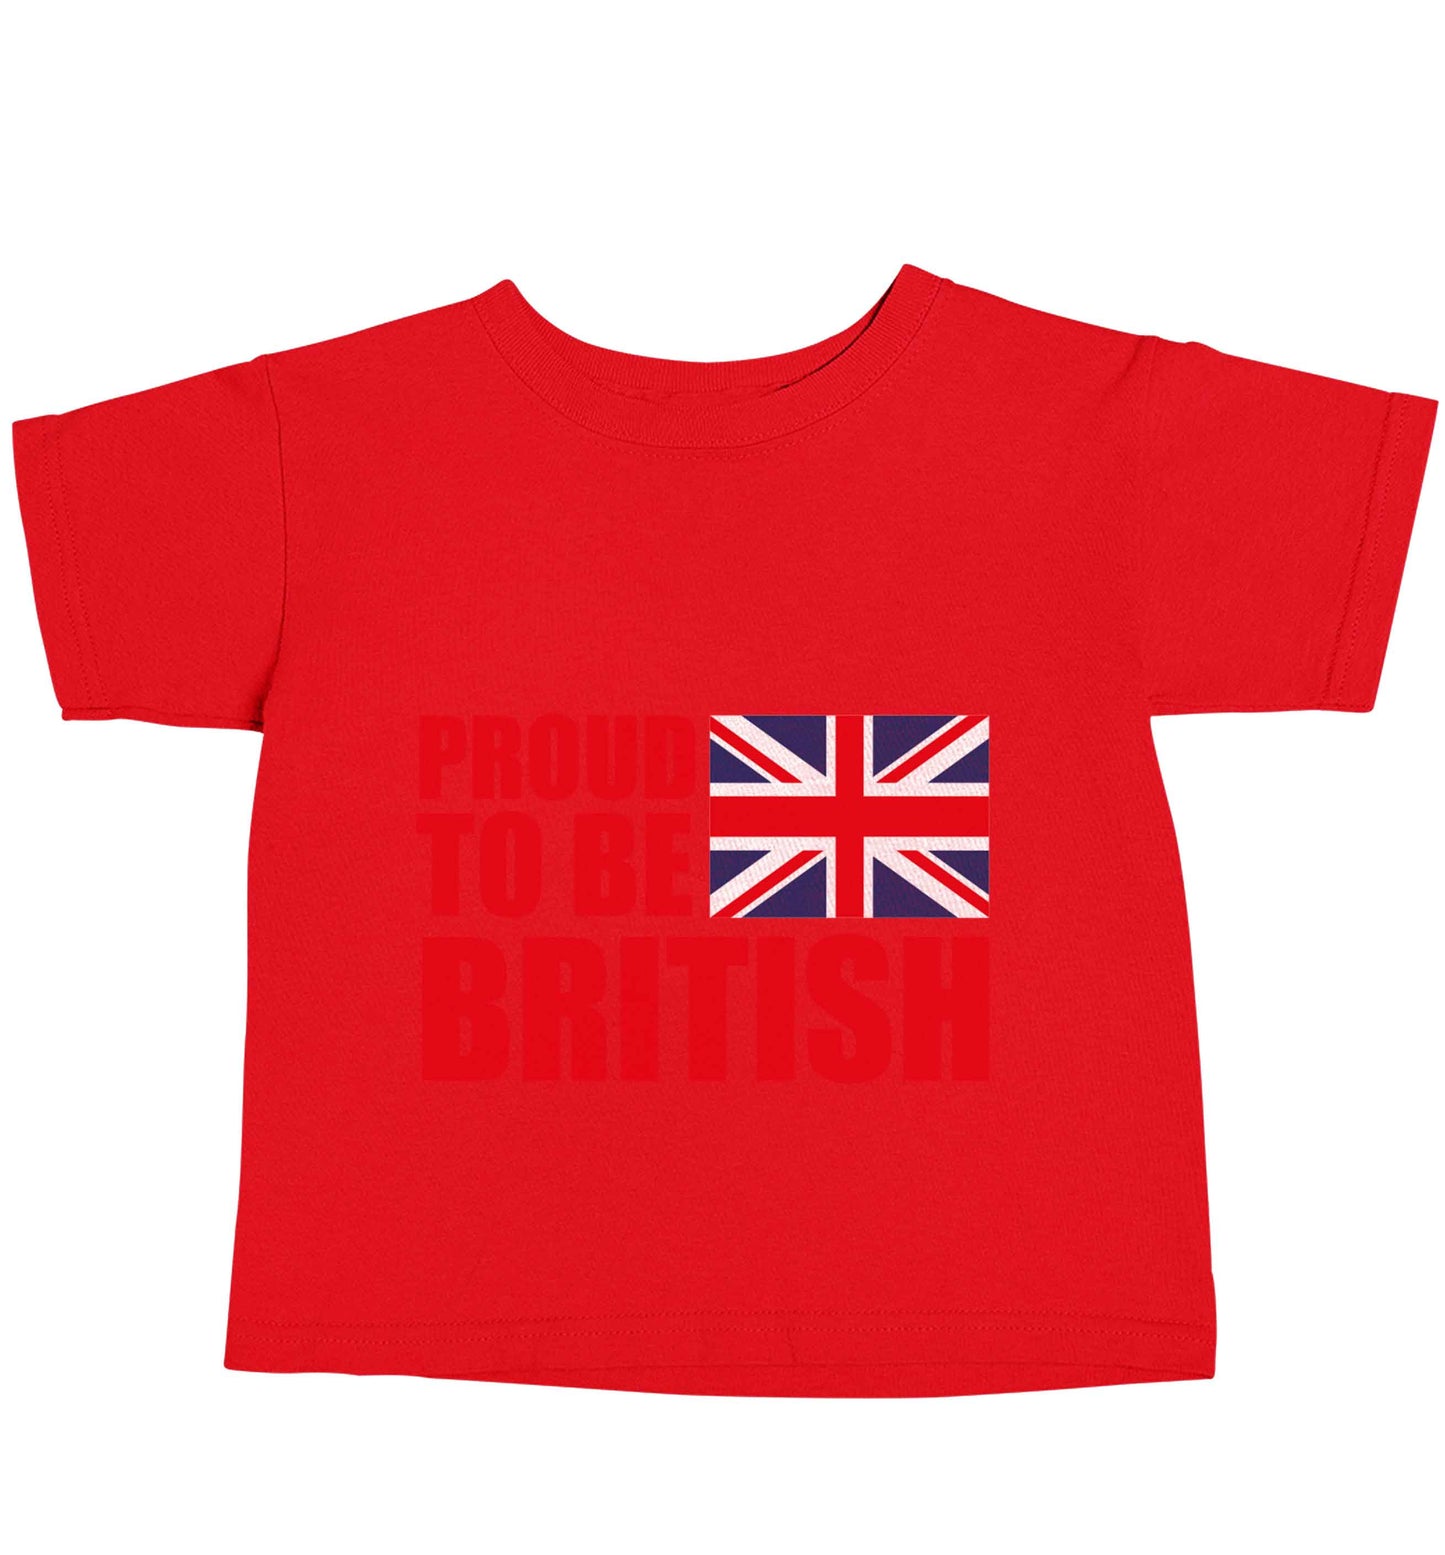 Proud to be British red baby toddler Tshirt 2 Years